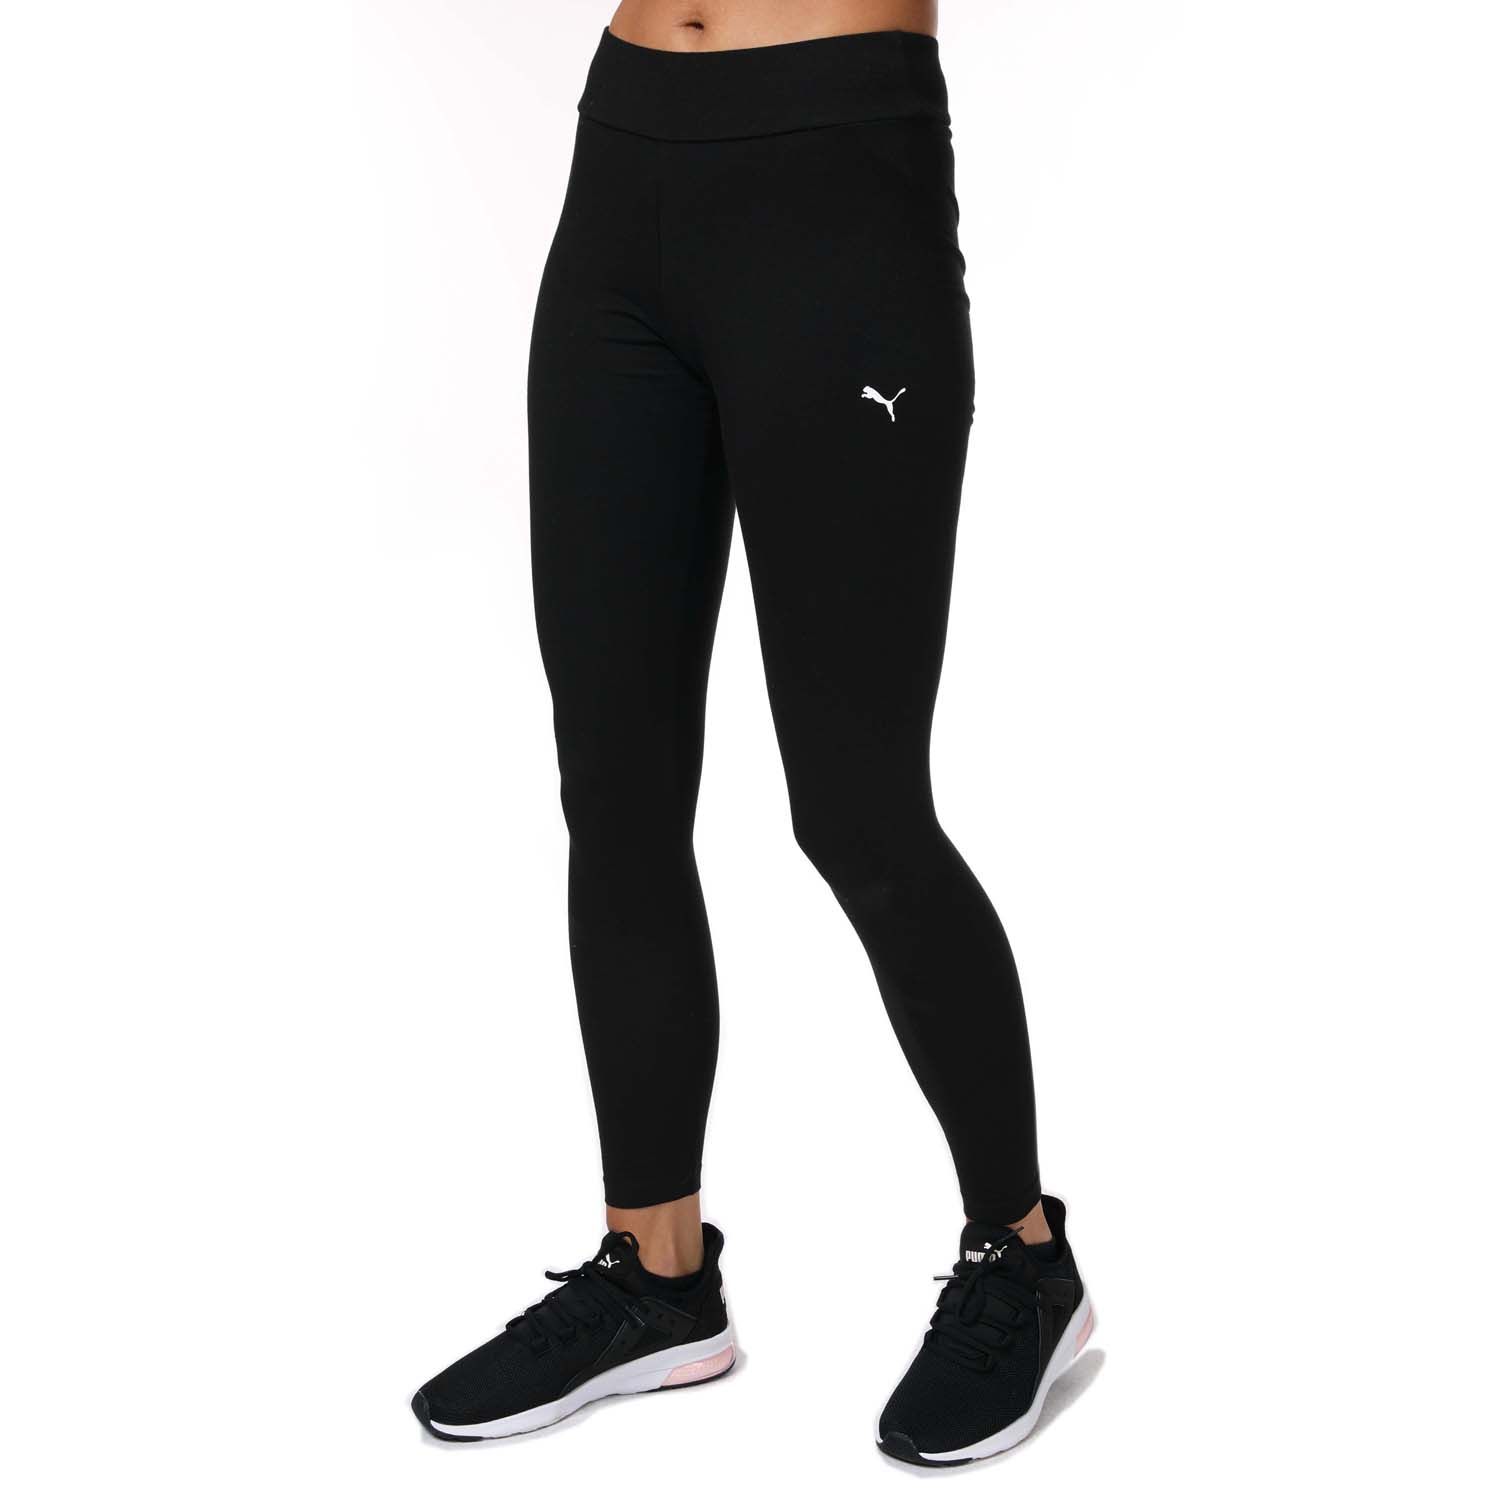 https://gtl-uk.prod.myauroraassets.com/p/109446/womens-essentials-leggings-58683551puma-womens-essentials-leggings-58683551.jpg?t=rp&w=1500&h=1500